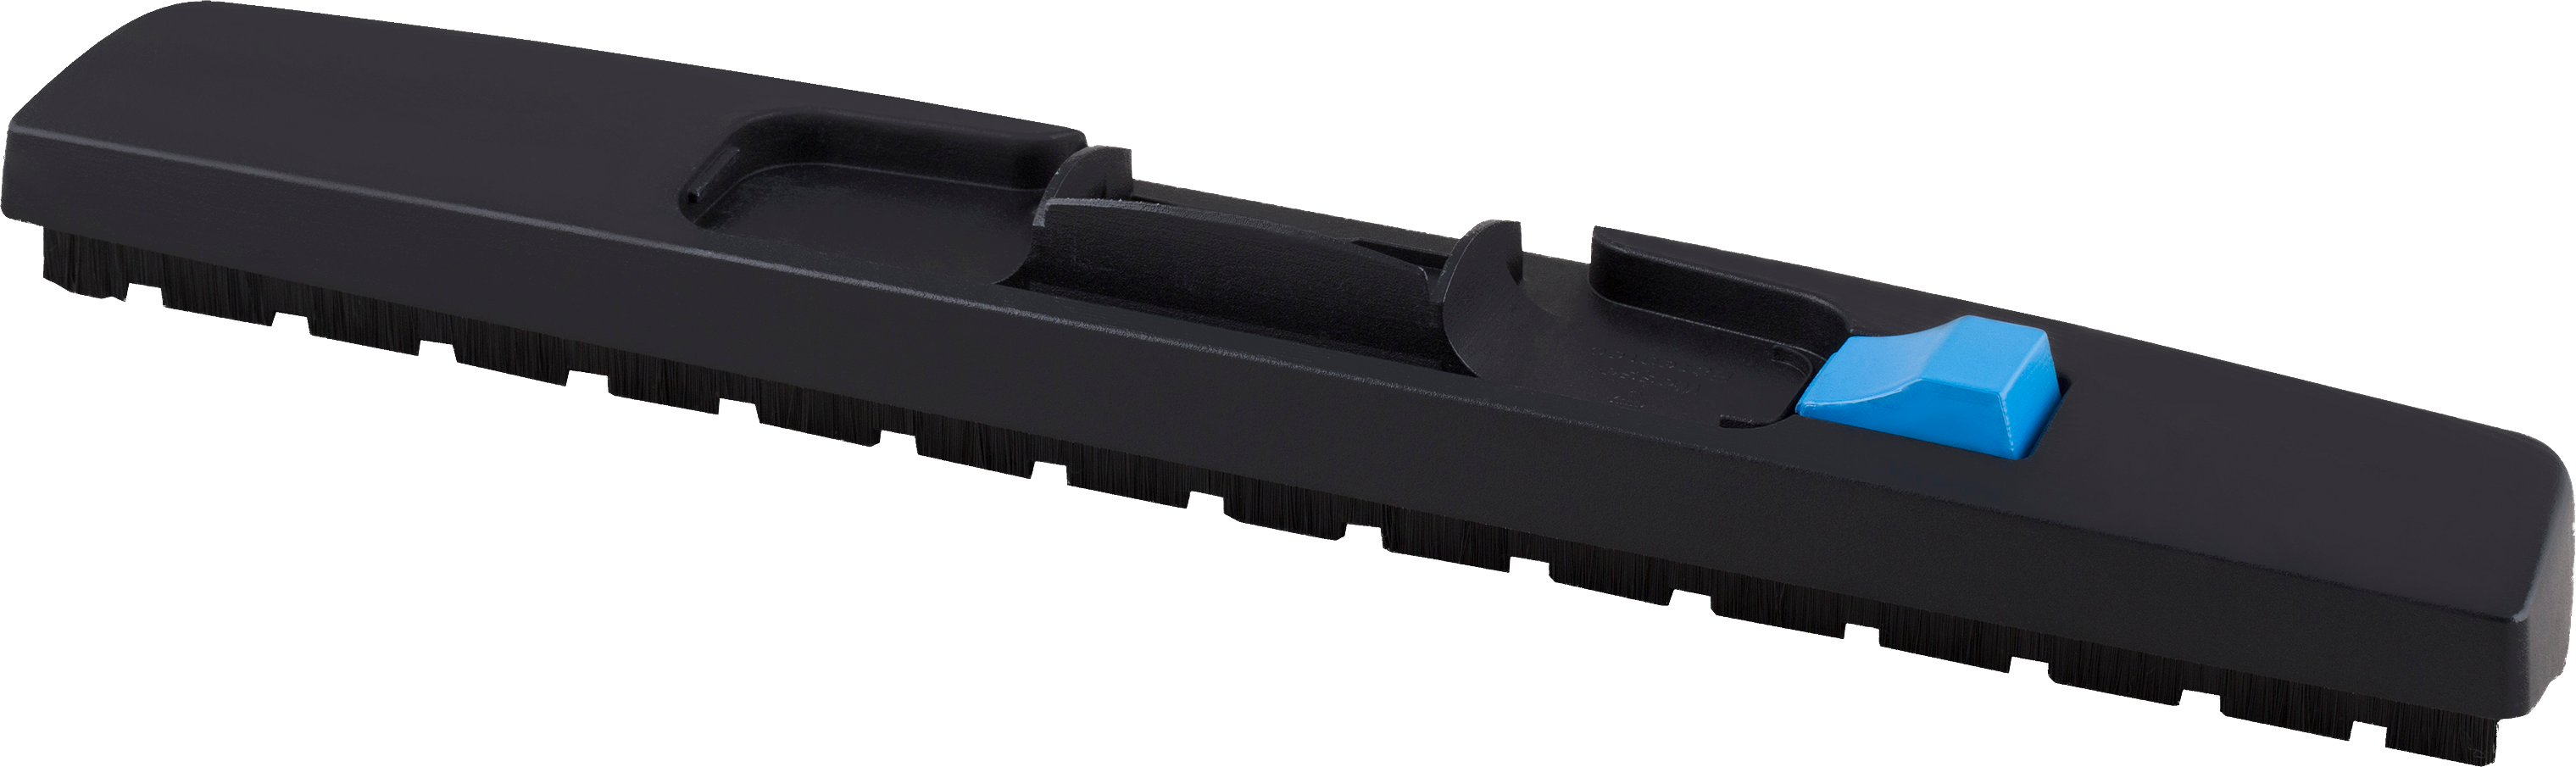 Wessel-Werk Pp Brush Strip Carrier 450Mm – Black (CDT450B)